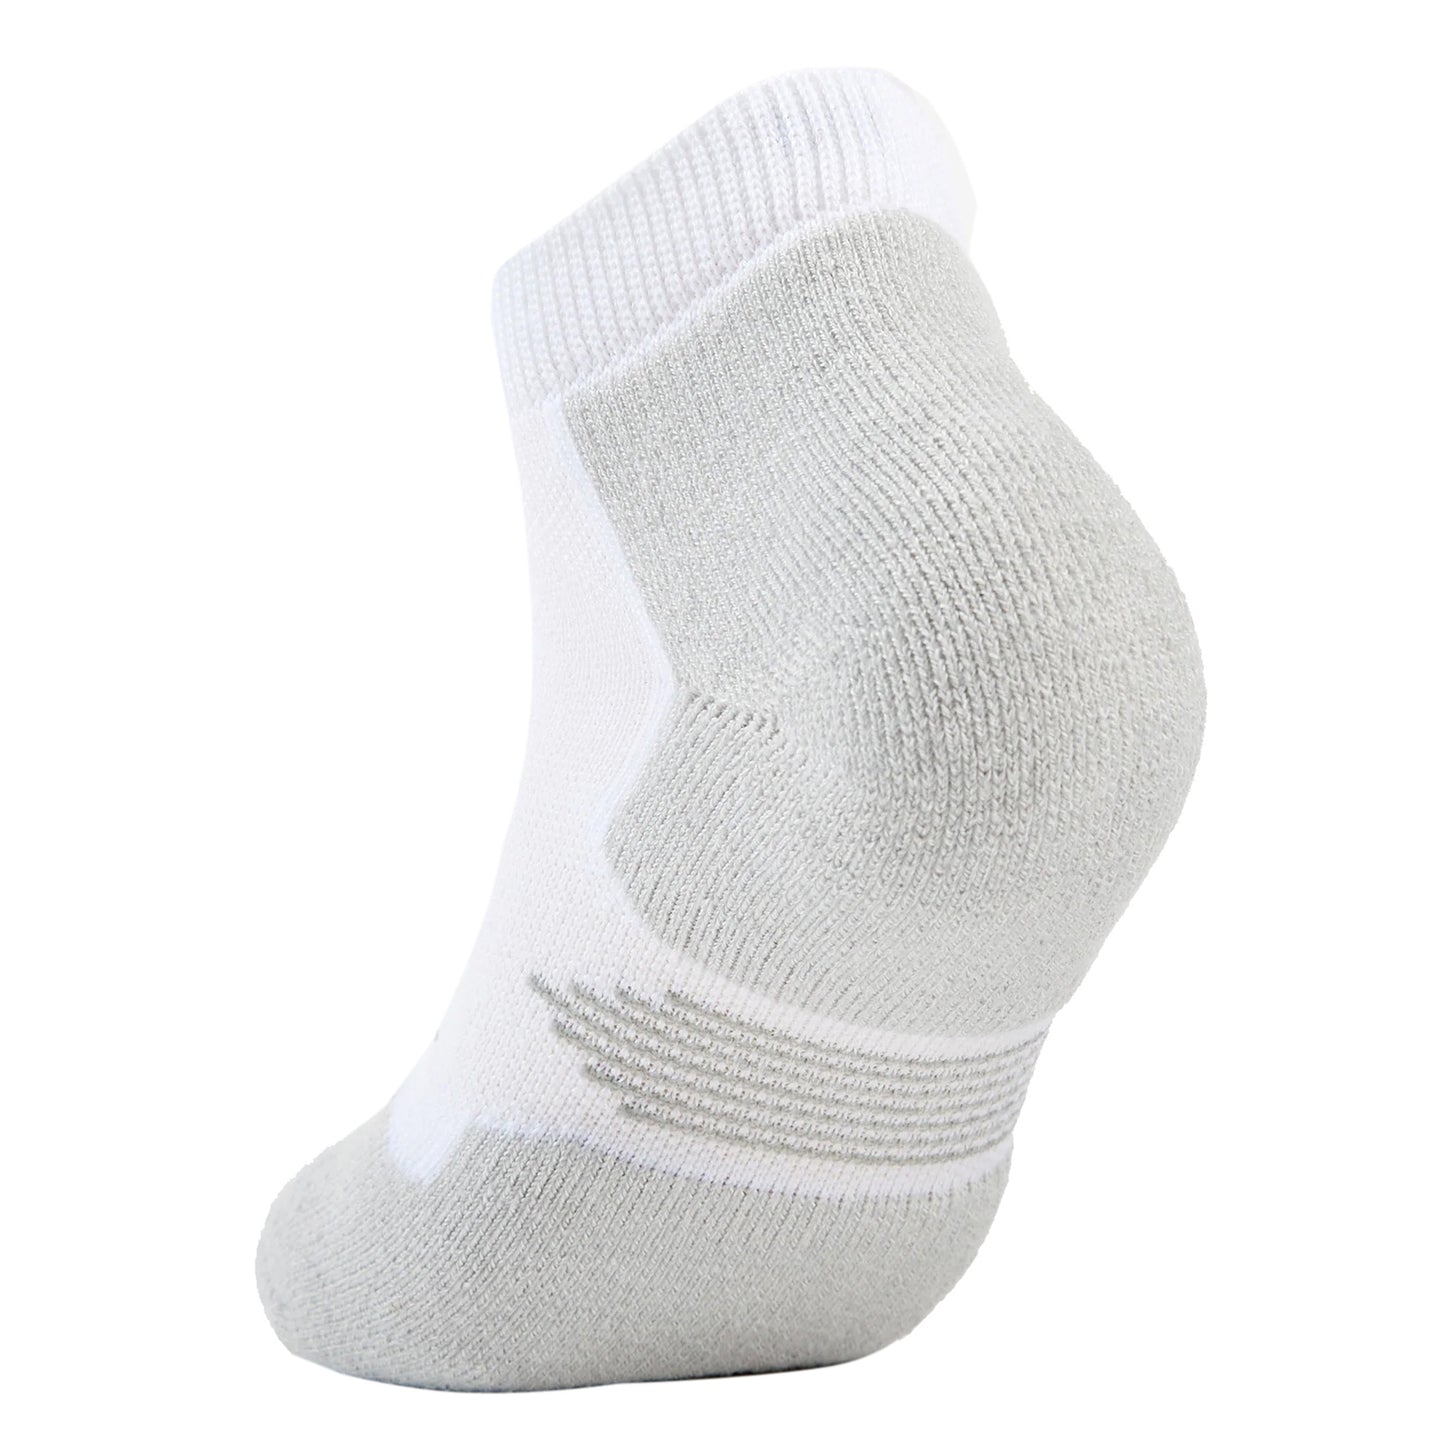 Peltz Shoes  Unisex Thorlo Socks Light Cushion Low-Cut Pickleball Socks - 1 Pair White P1CCU0-WHT